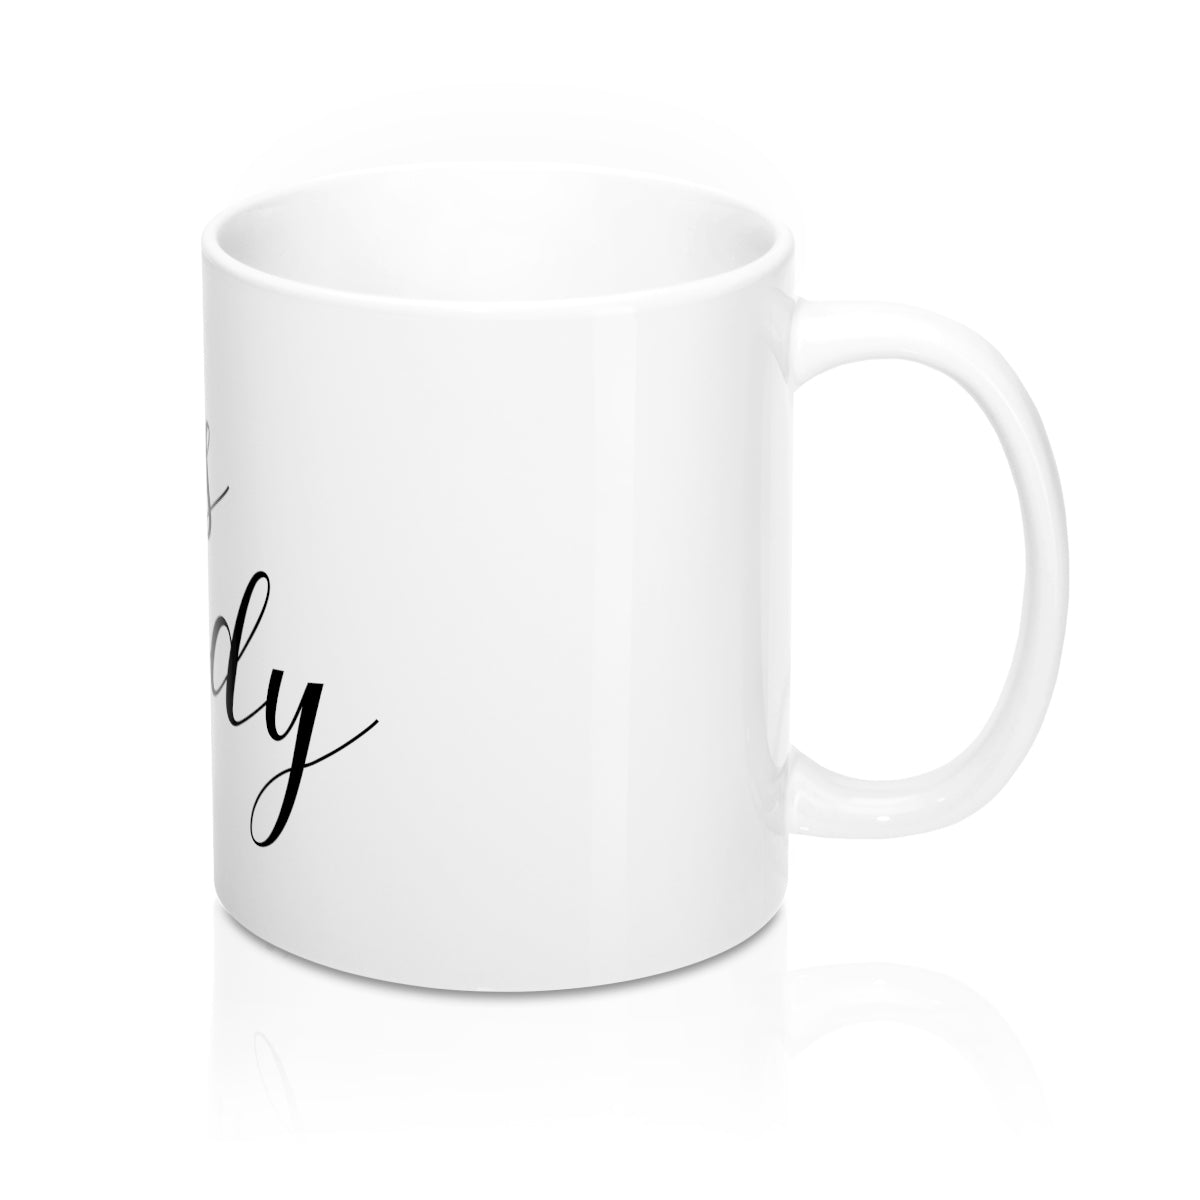 Boss Lady 11oz Ceramic Mug - Inspired By Savy